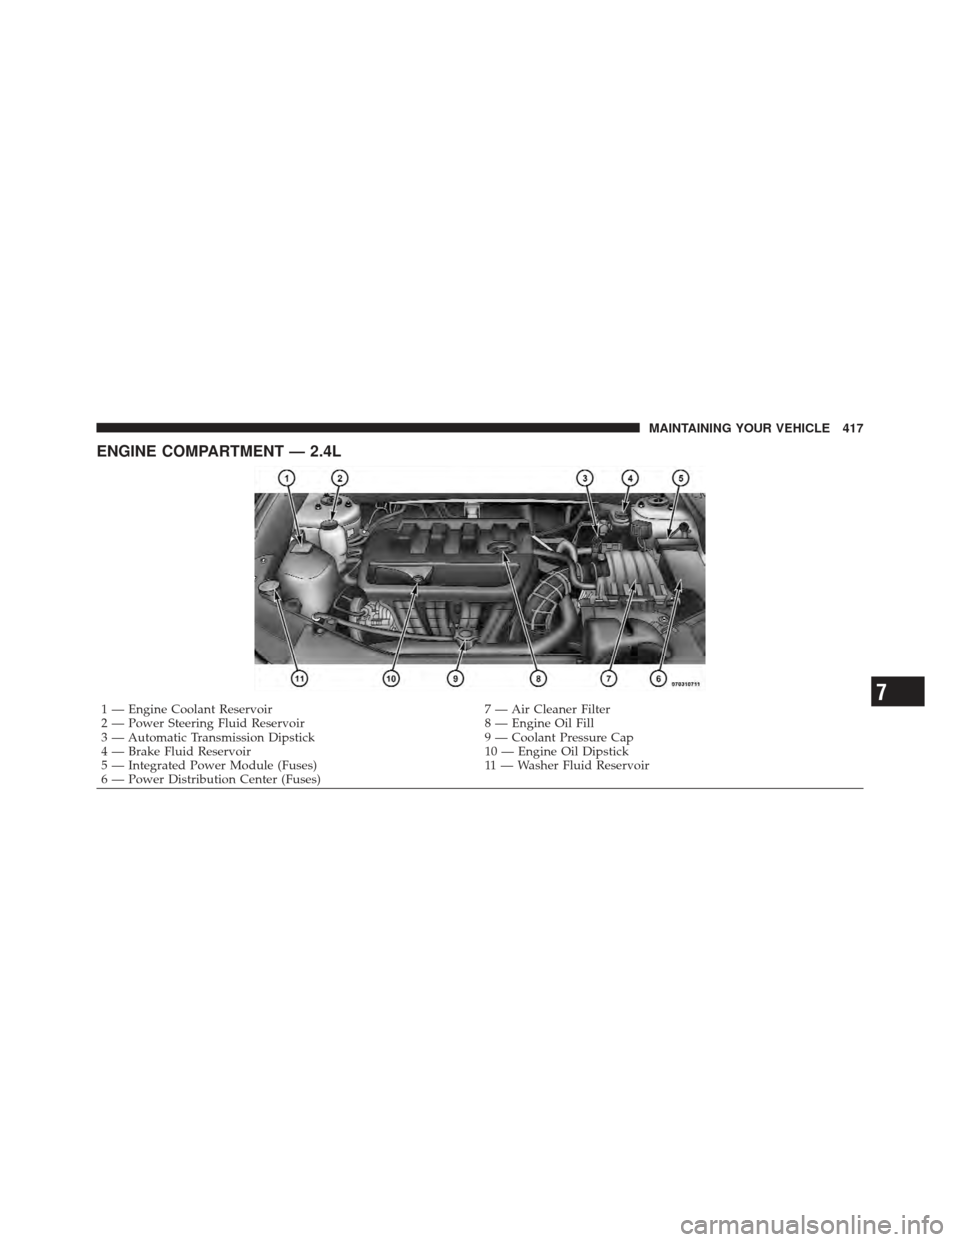 DODGE AVENGER 2012 2.G Owners Manual ENGINE COMPARTMENT — 2.4L
1 — Engine Coolant Reservoir7 — Air Cleaner Filter
2 — Power Steering Fluid Reservoir 8 — Engine Oil Fill
3 — Automatic Transmission Dipstick 9 — Coolant Pressu